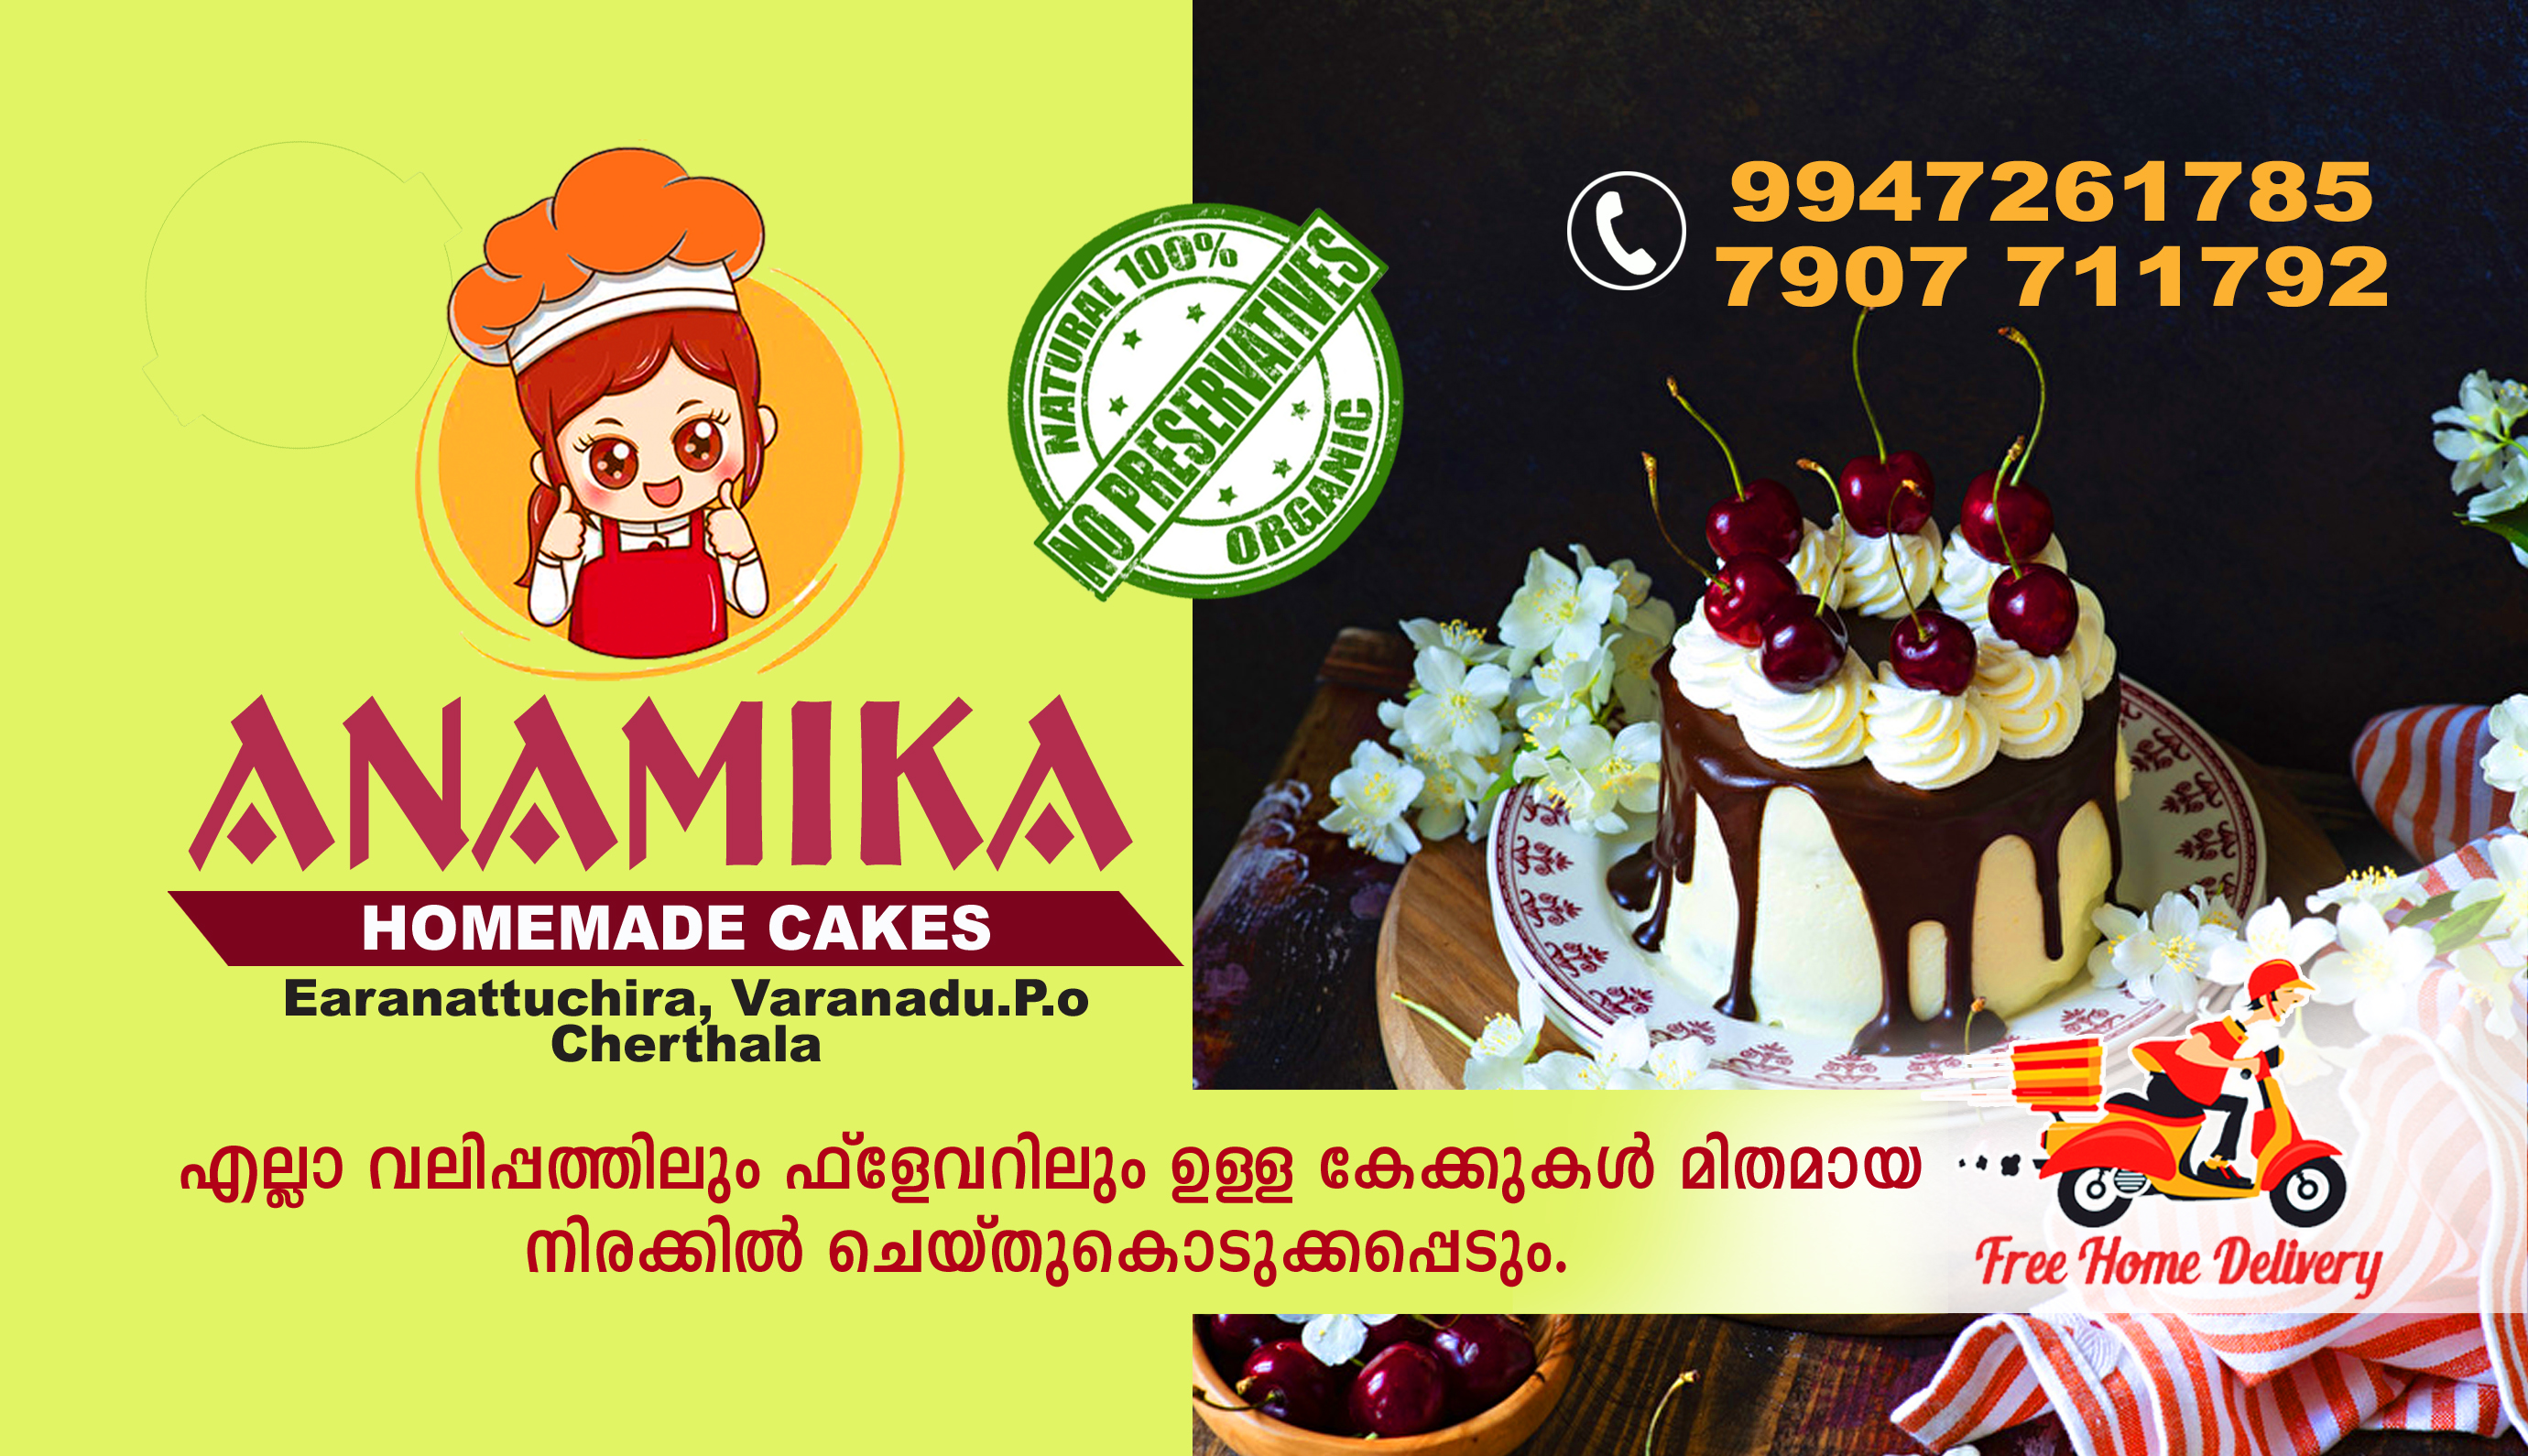 ANAMIKA HOMEMADE CAKES, Cake Making,  service in Cherthala, Alappuzha